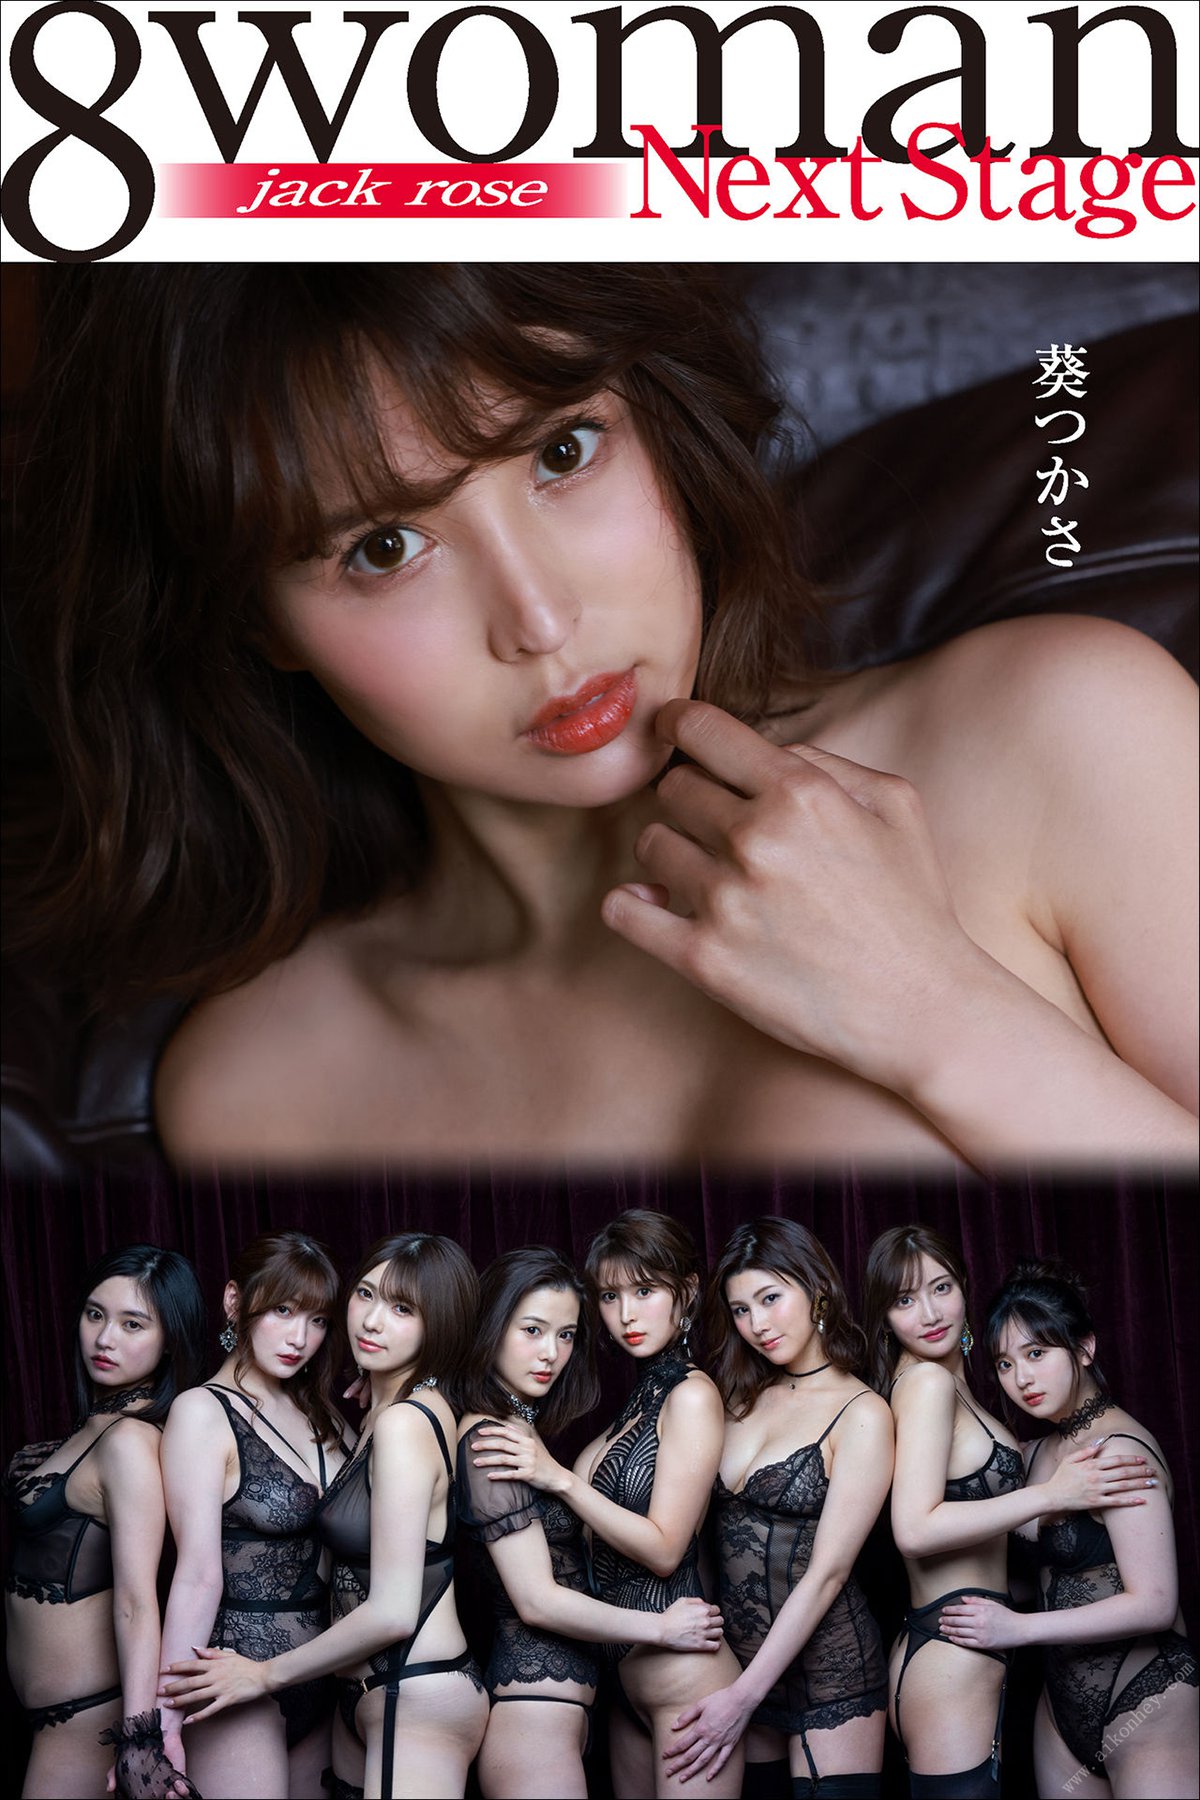 Photobook Tsukasa Aoi 葵つかさ – 8woman Next Stage jack rose 2022-08-19